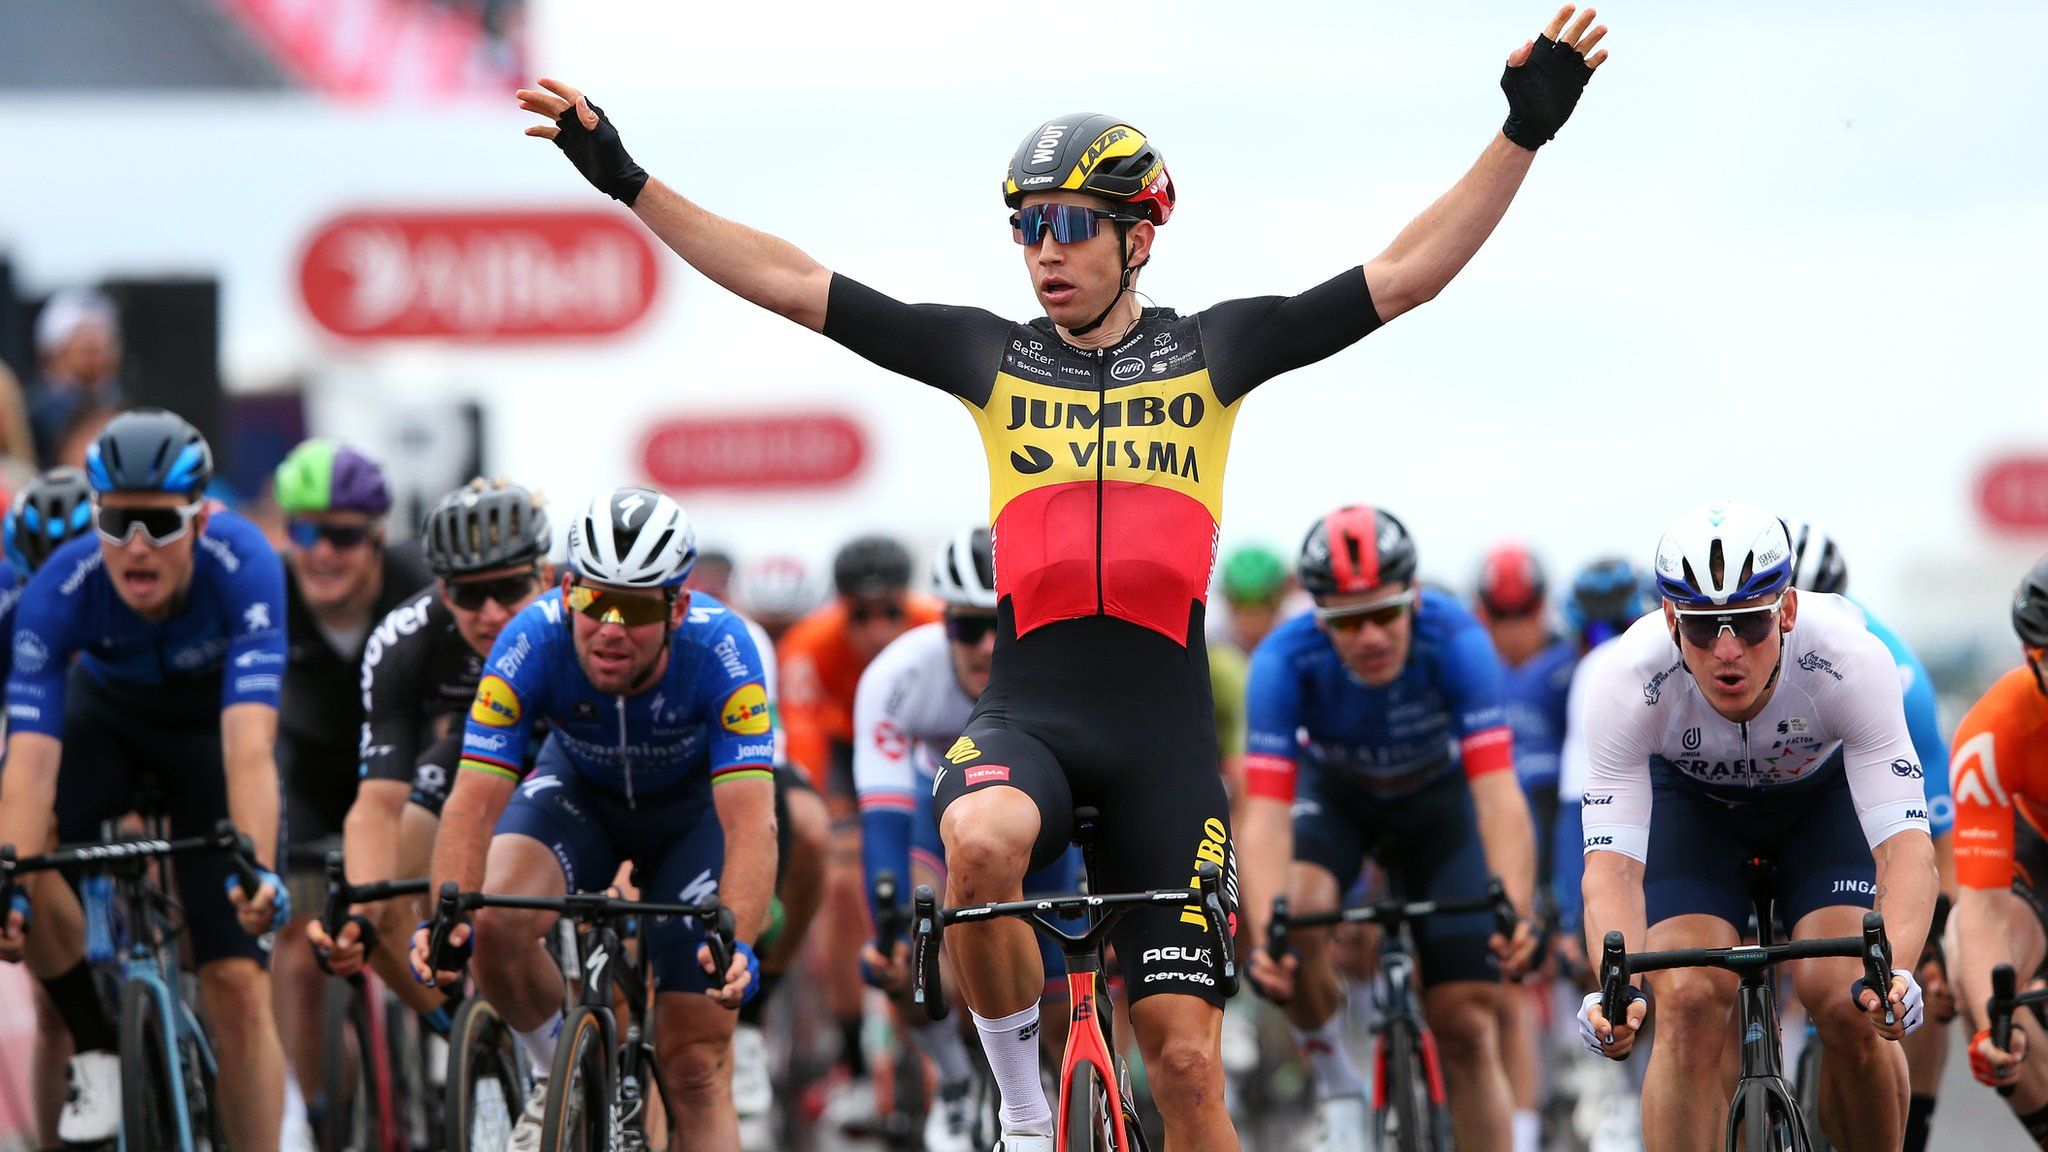 Belgium's Wout van Aert won this year's Tour of Britain